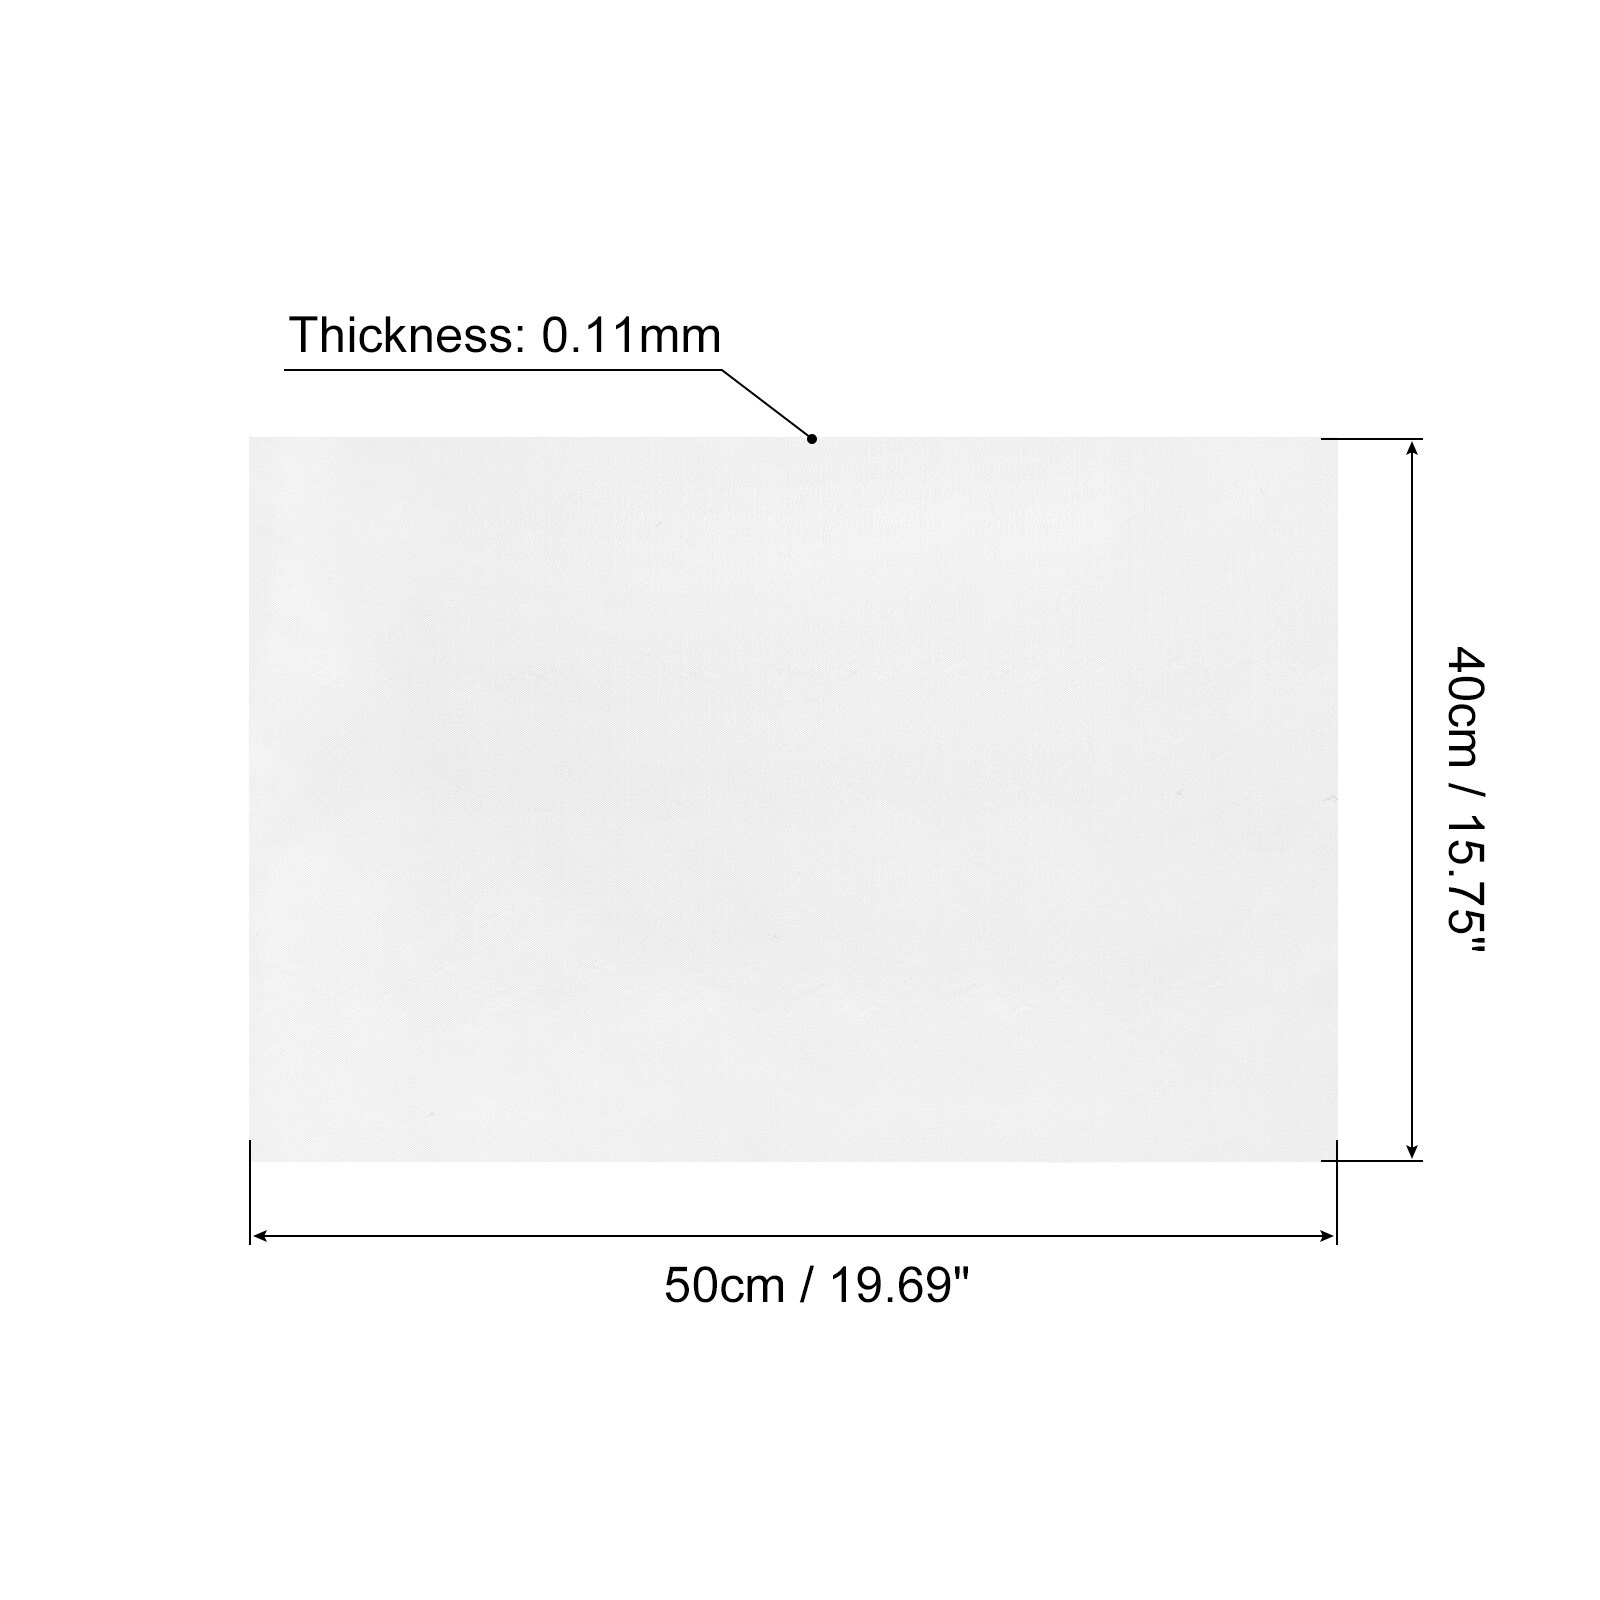 Handy Housewares 14 x 12.5 Parchment Paper 10-Pack Non-Stick Baking Sheets,  Pre-Cut Cookie Sheet Pan Liner